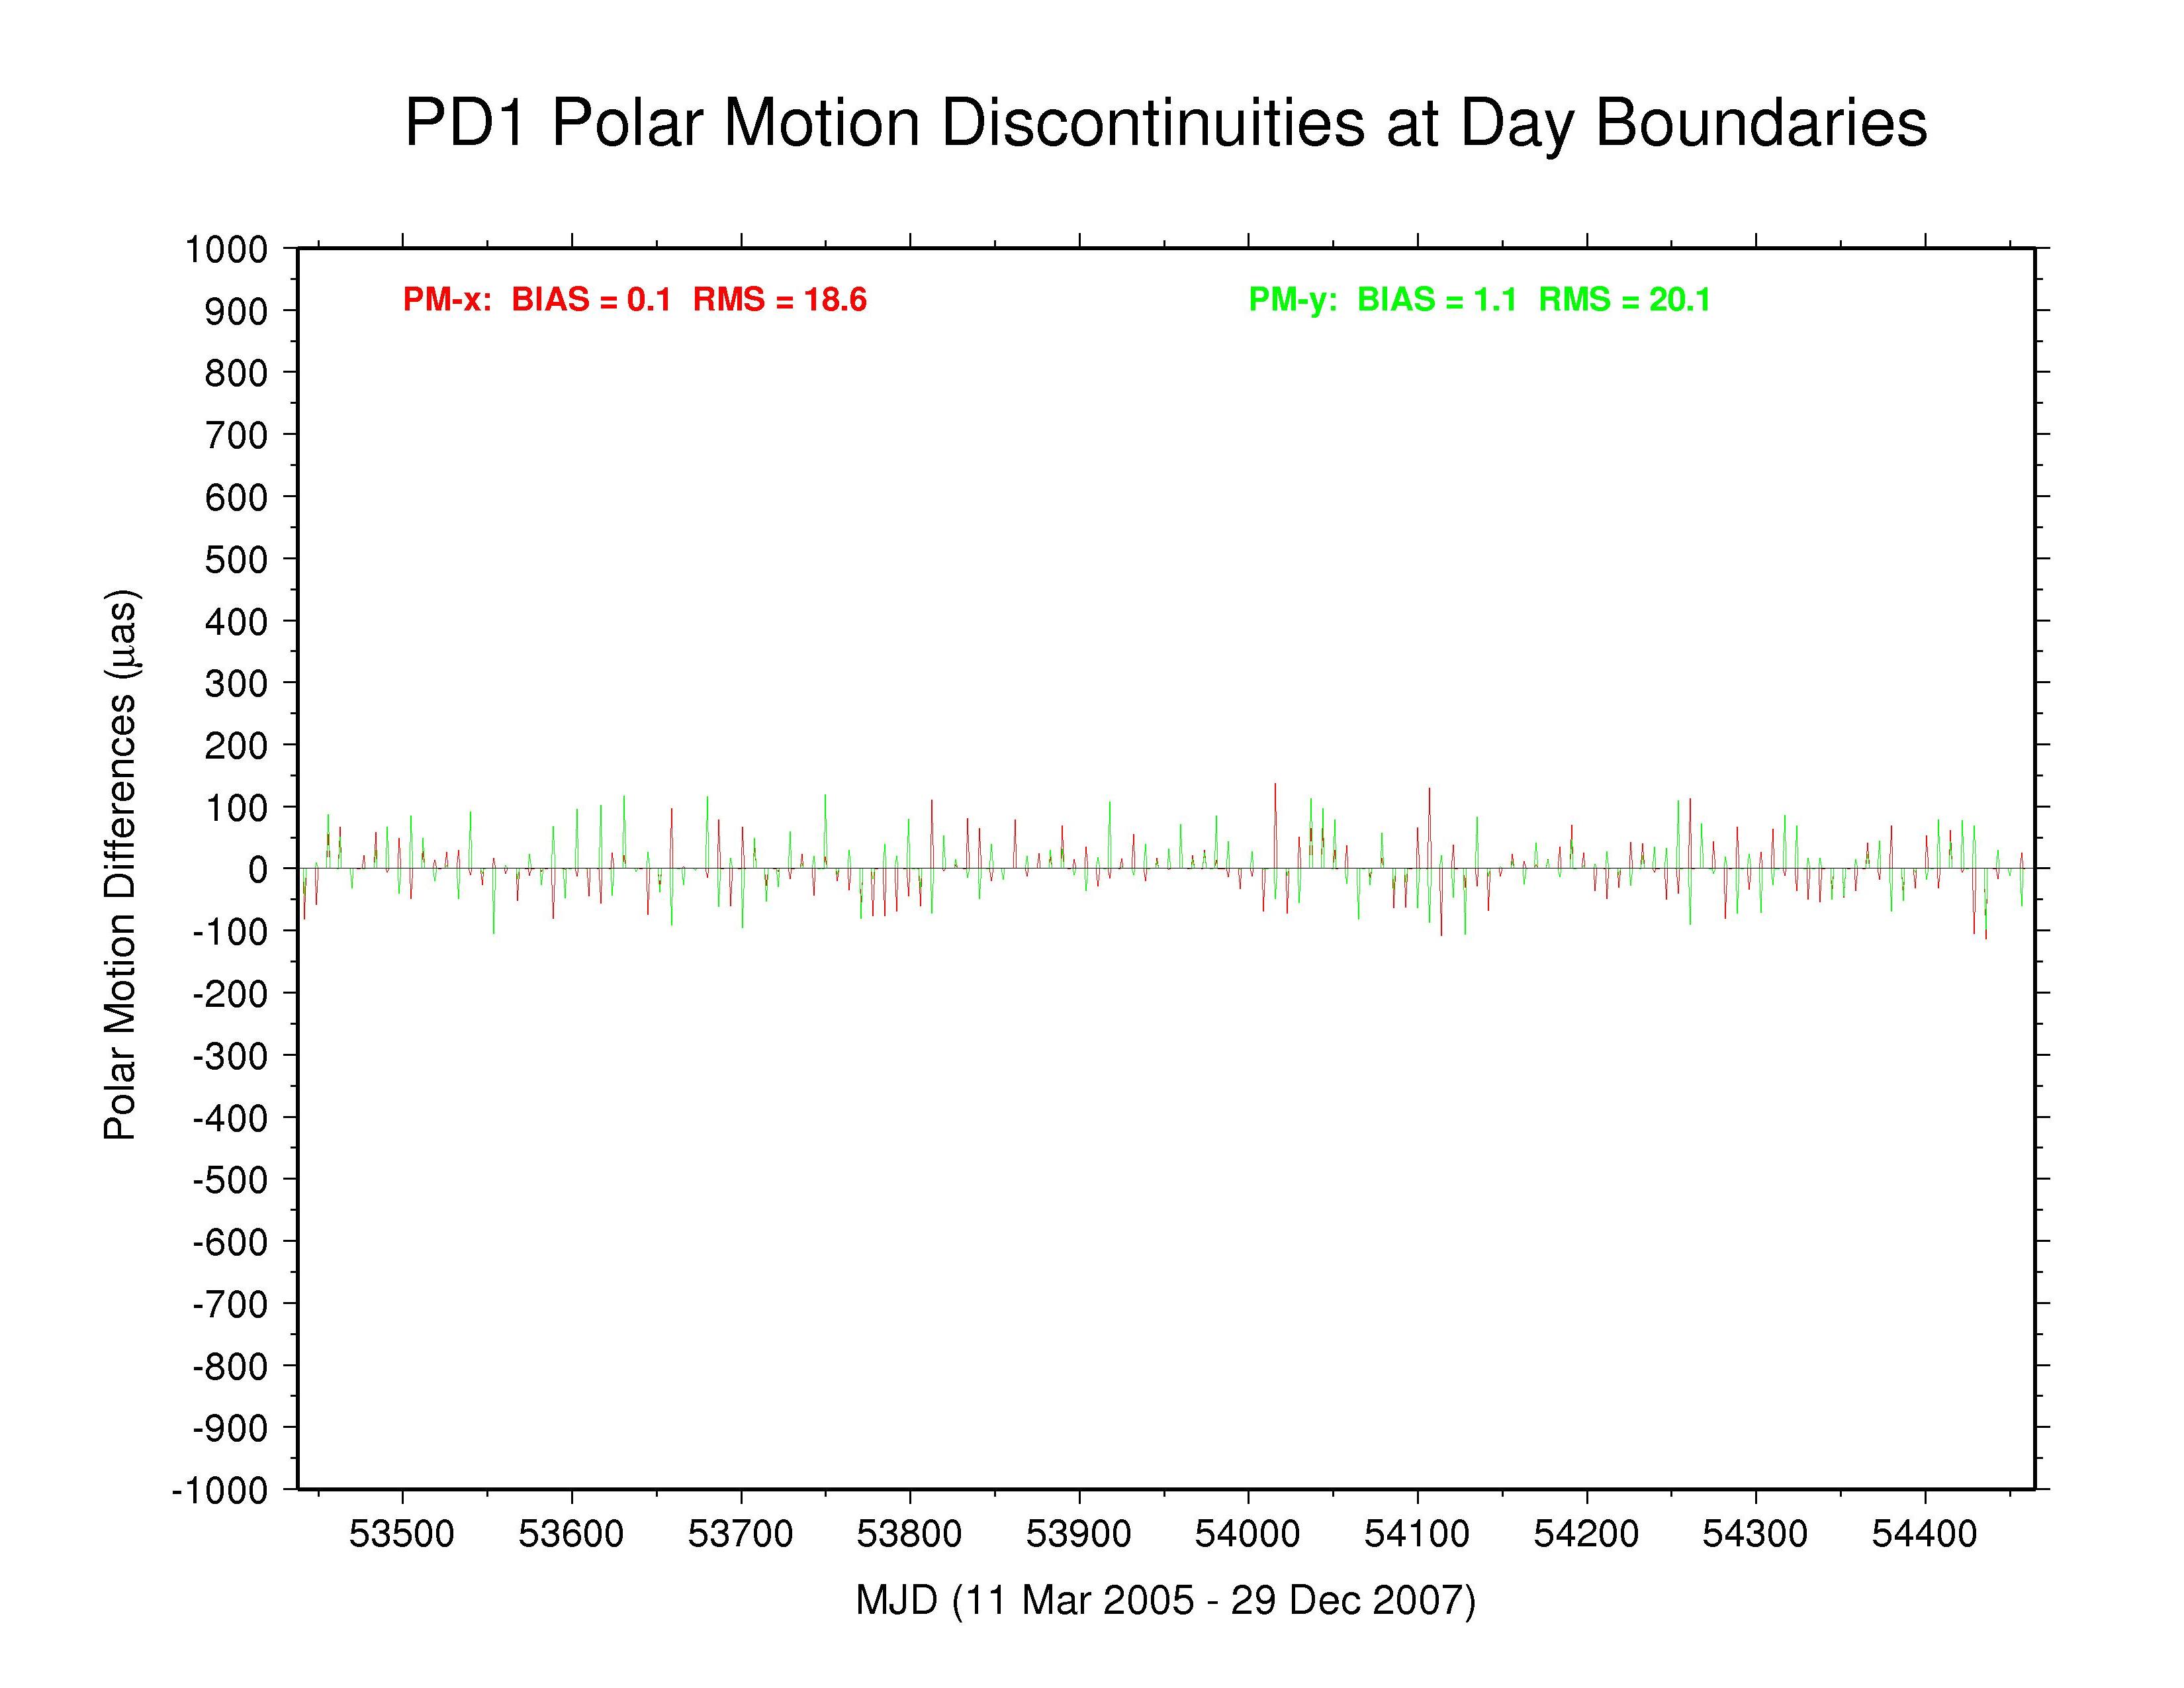 PDR polar motion discontinuities